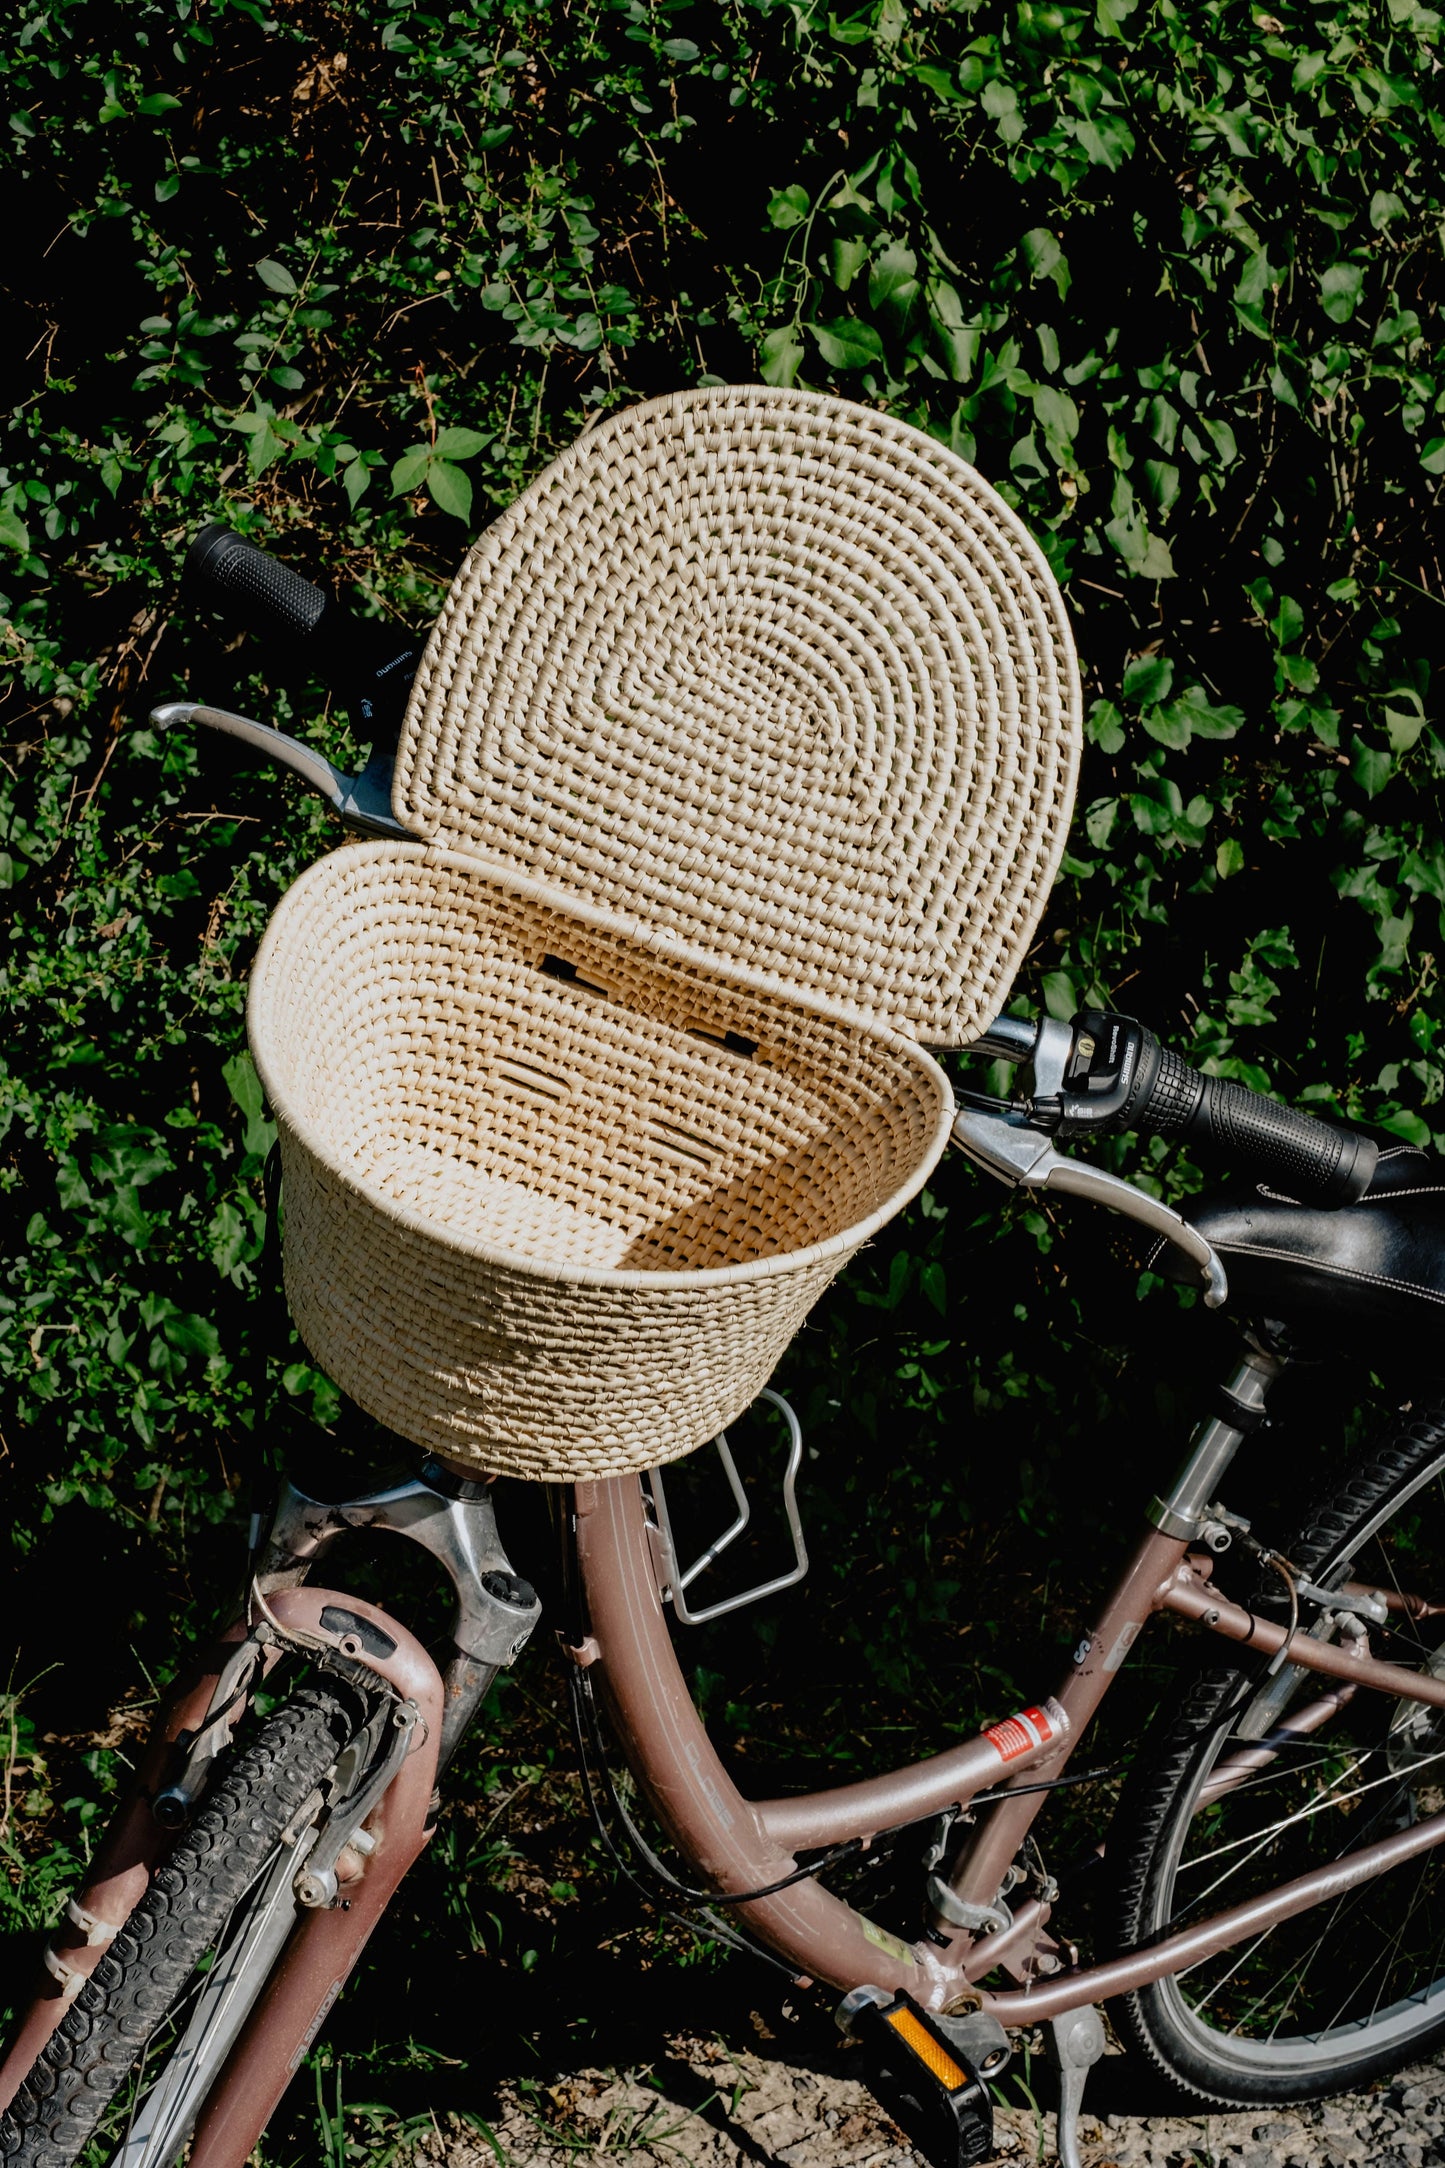 Handmade Bike Basket